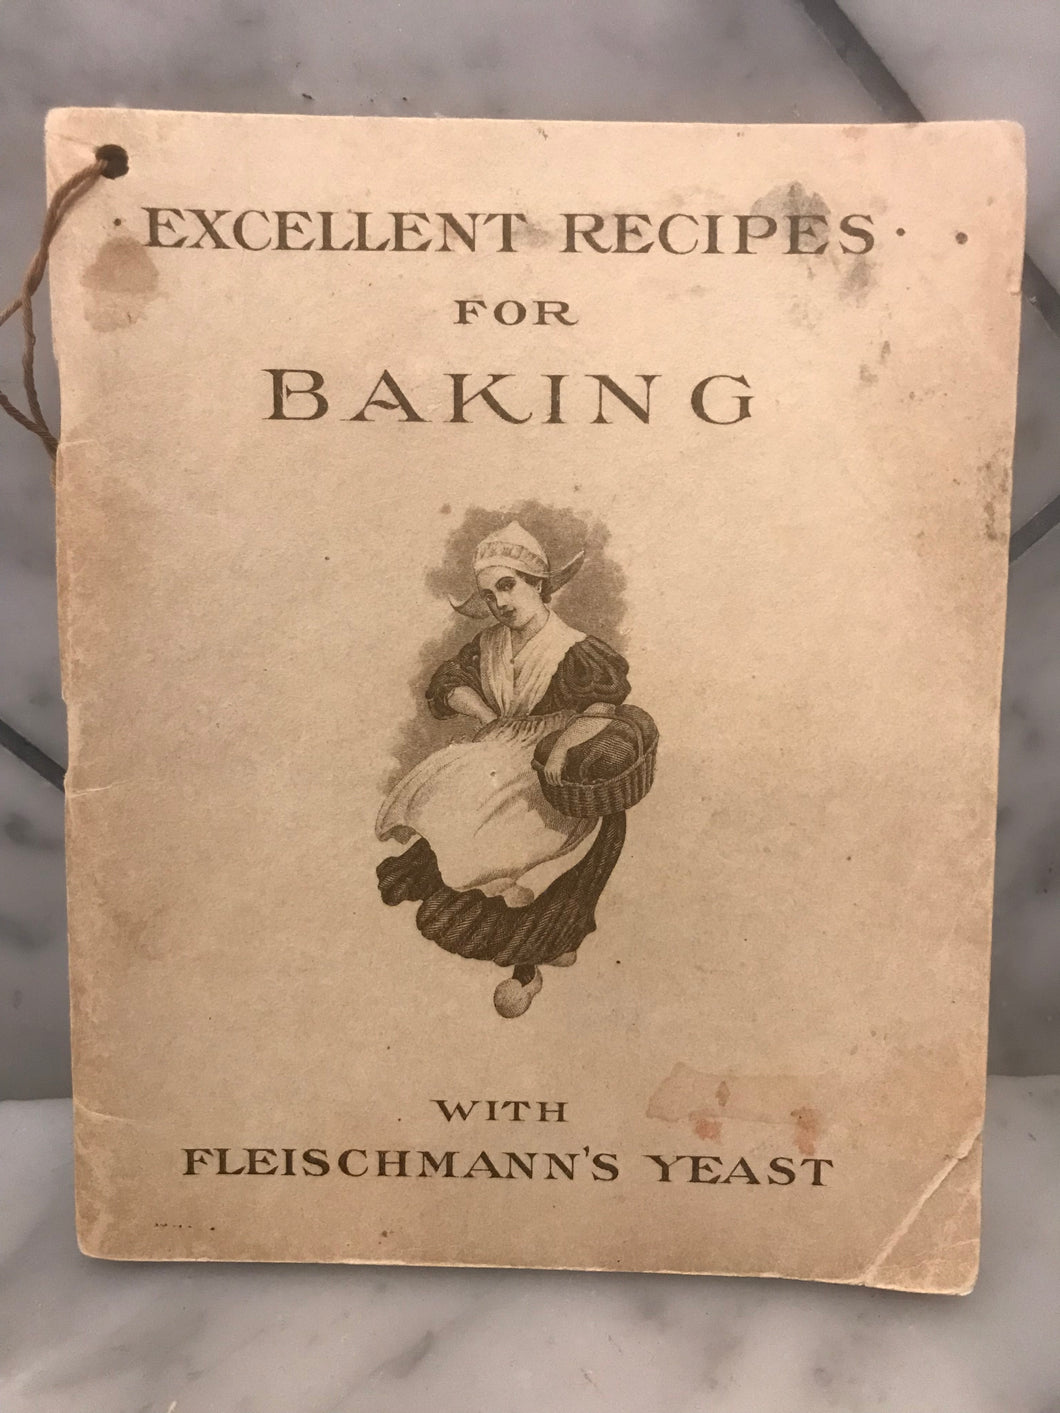 Excellent Recipes for Baking with Fleischmann's Yeast